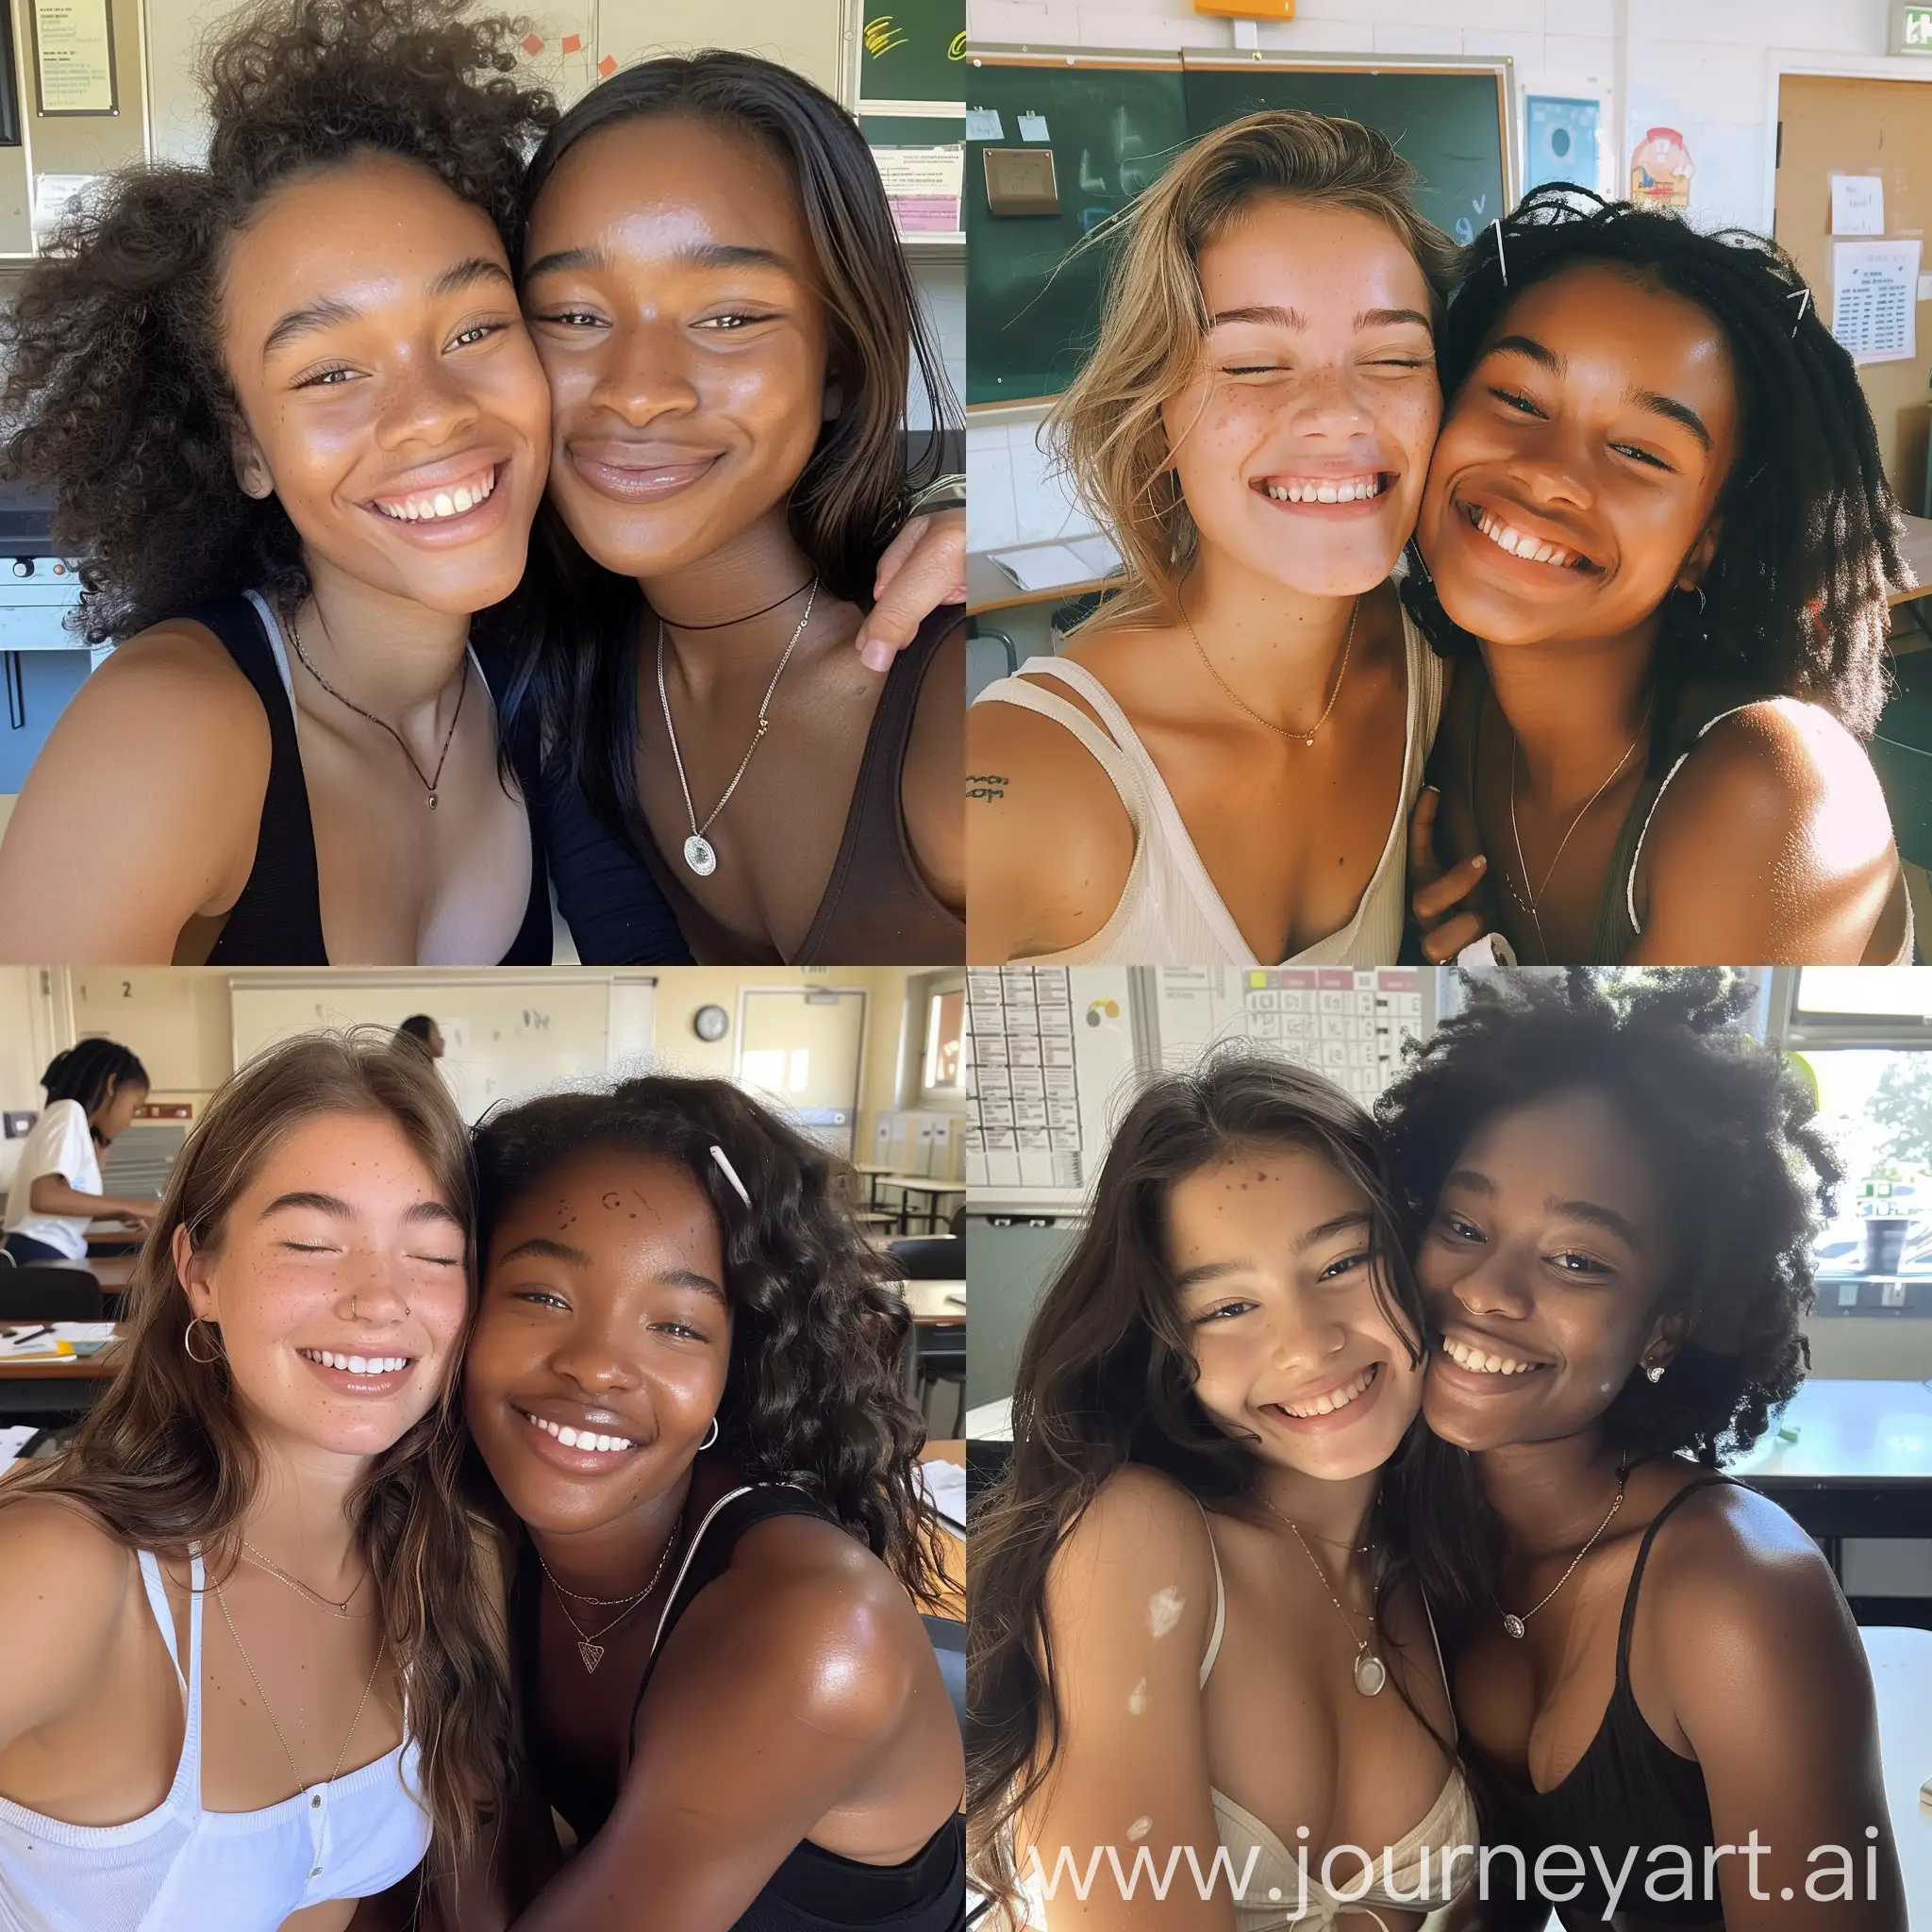 Teenage-Girls-Smiling-Together-in-Classroom-Selfie